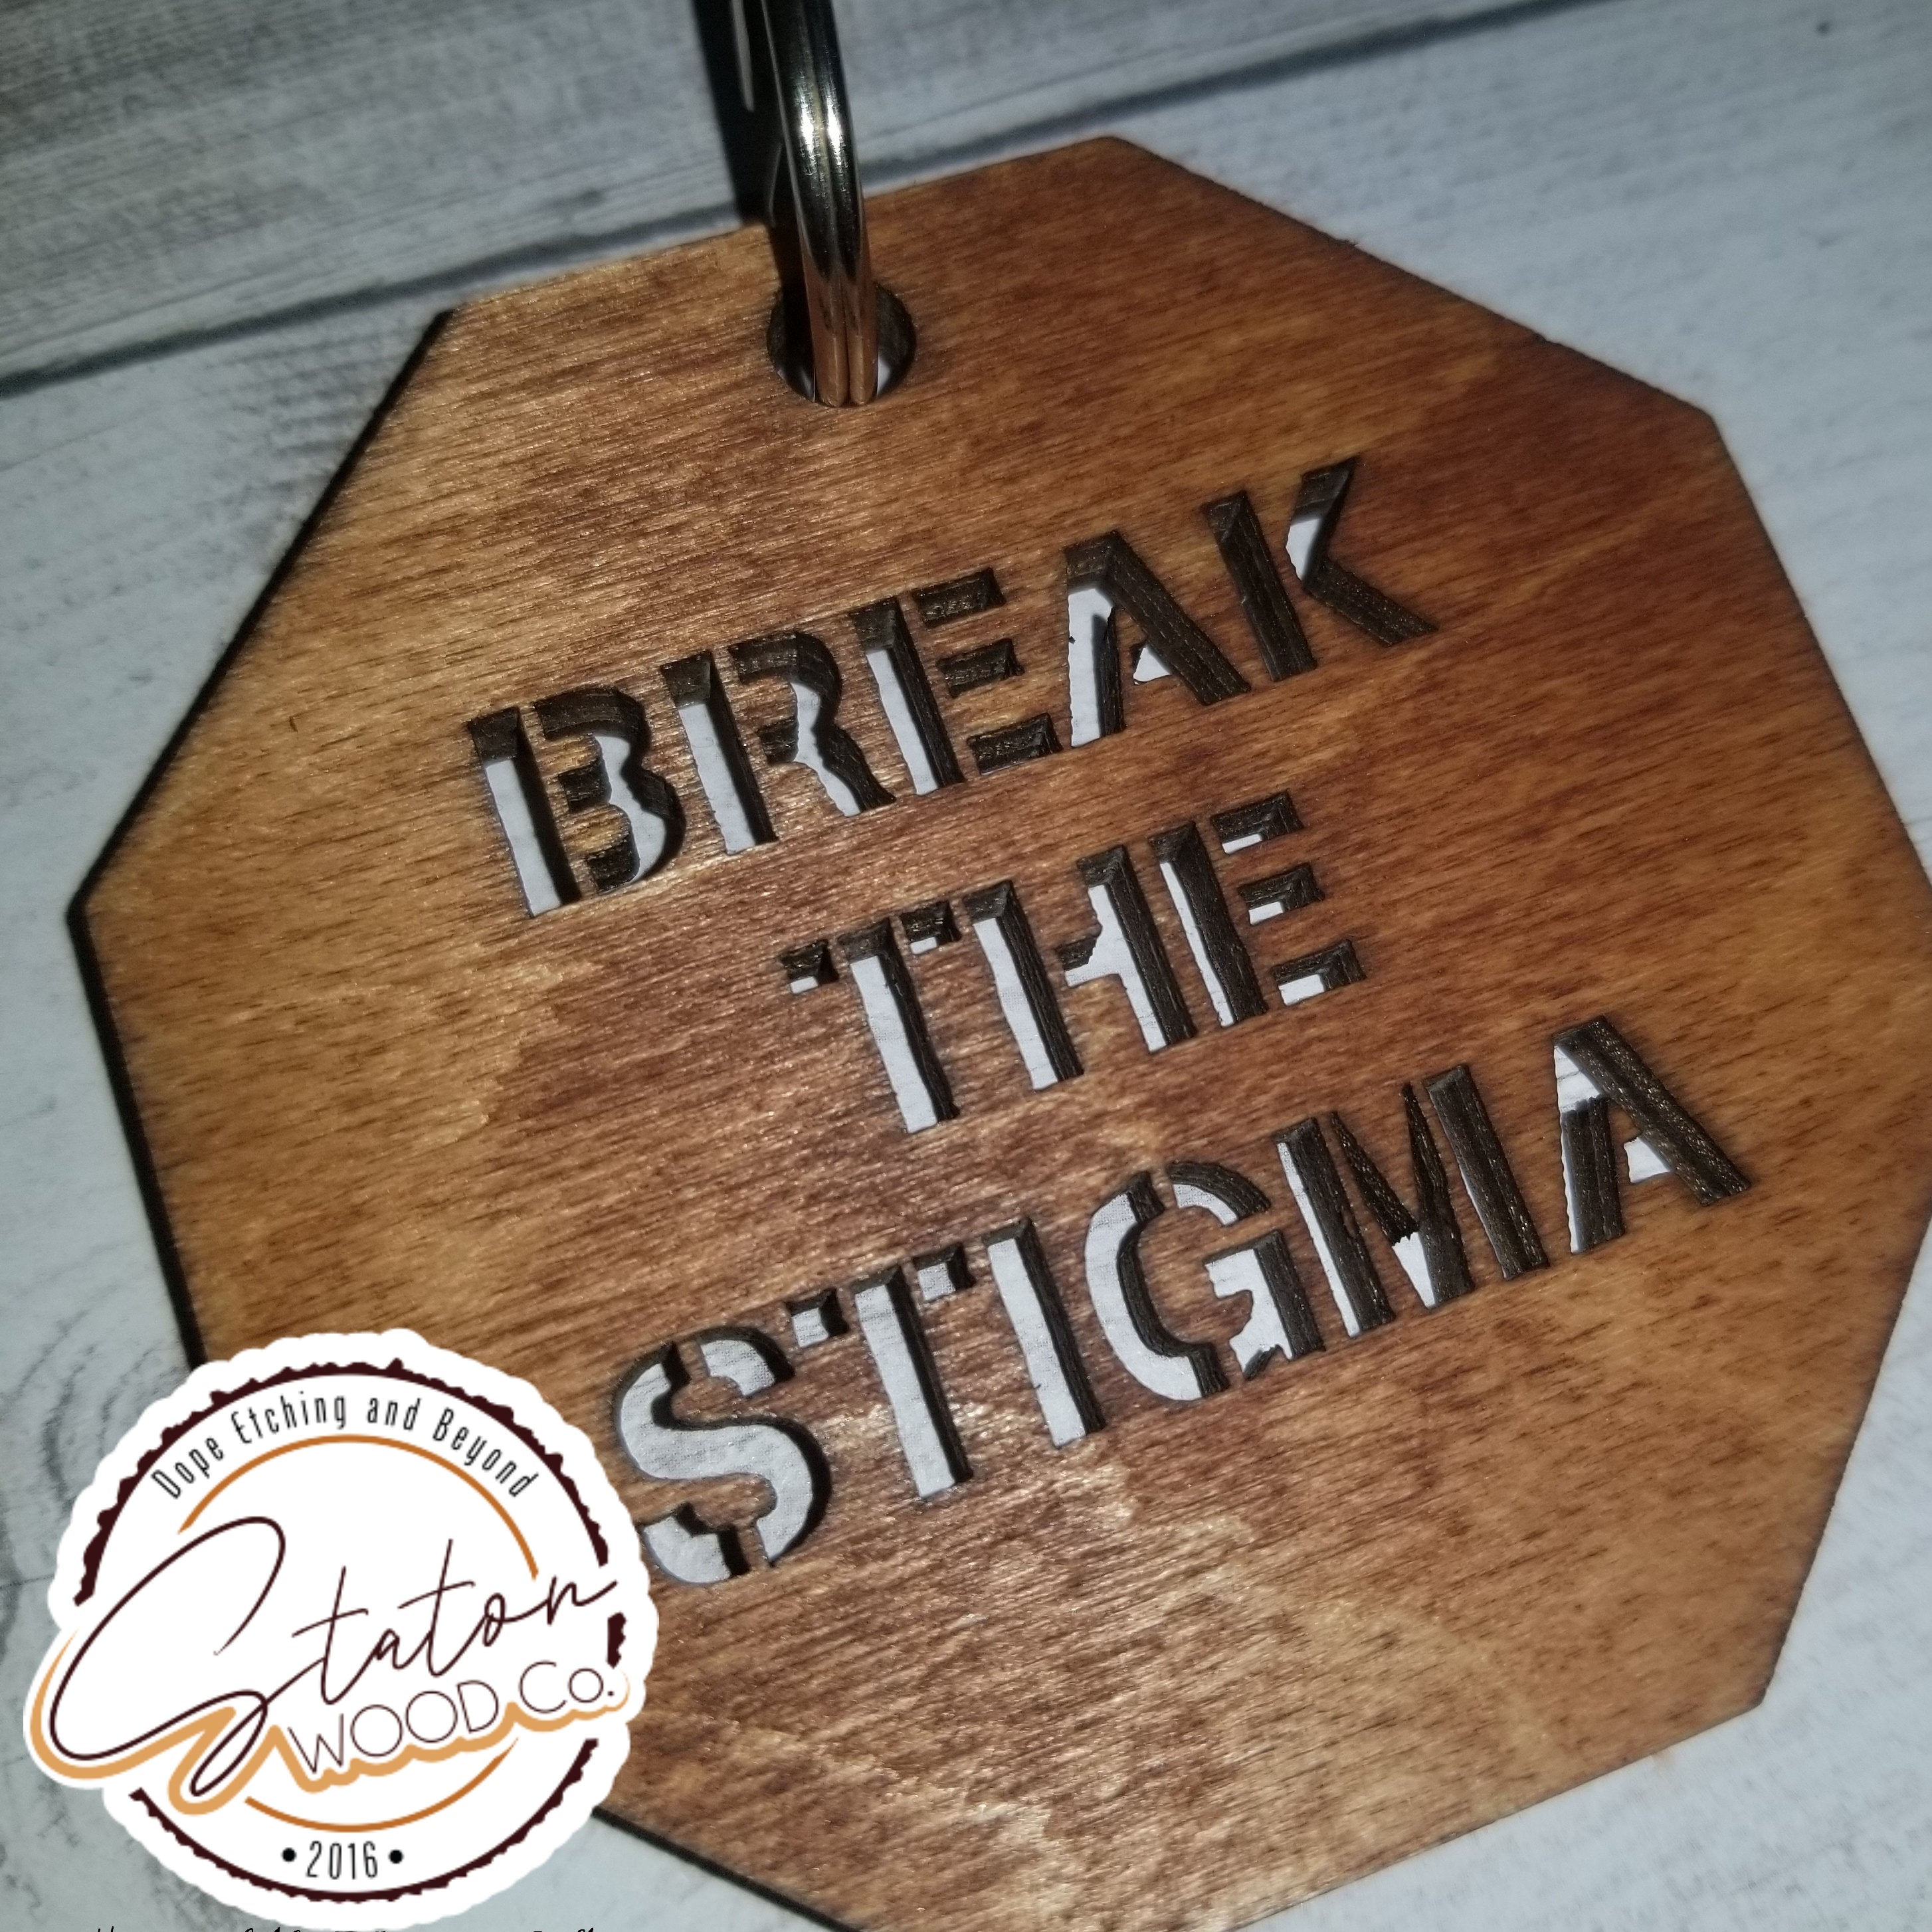 Break the Stigma